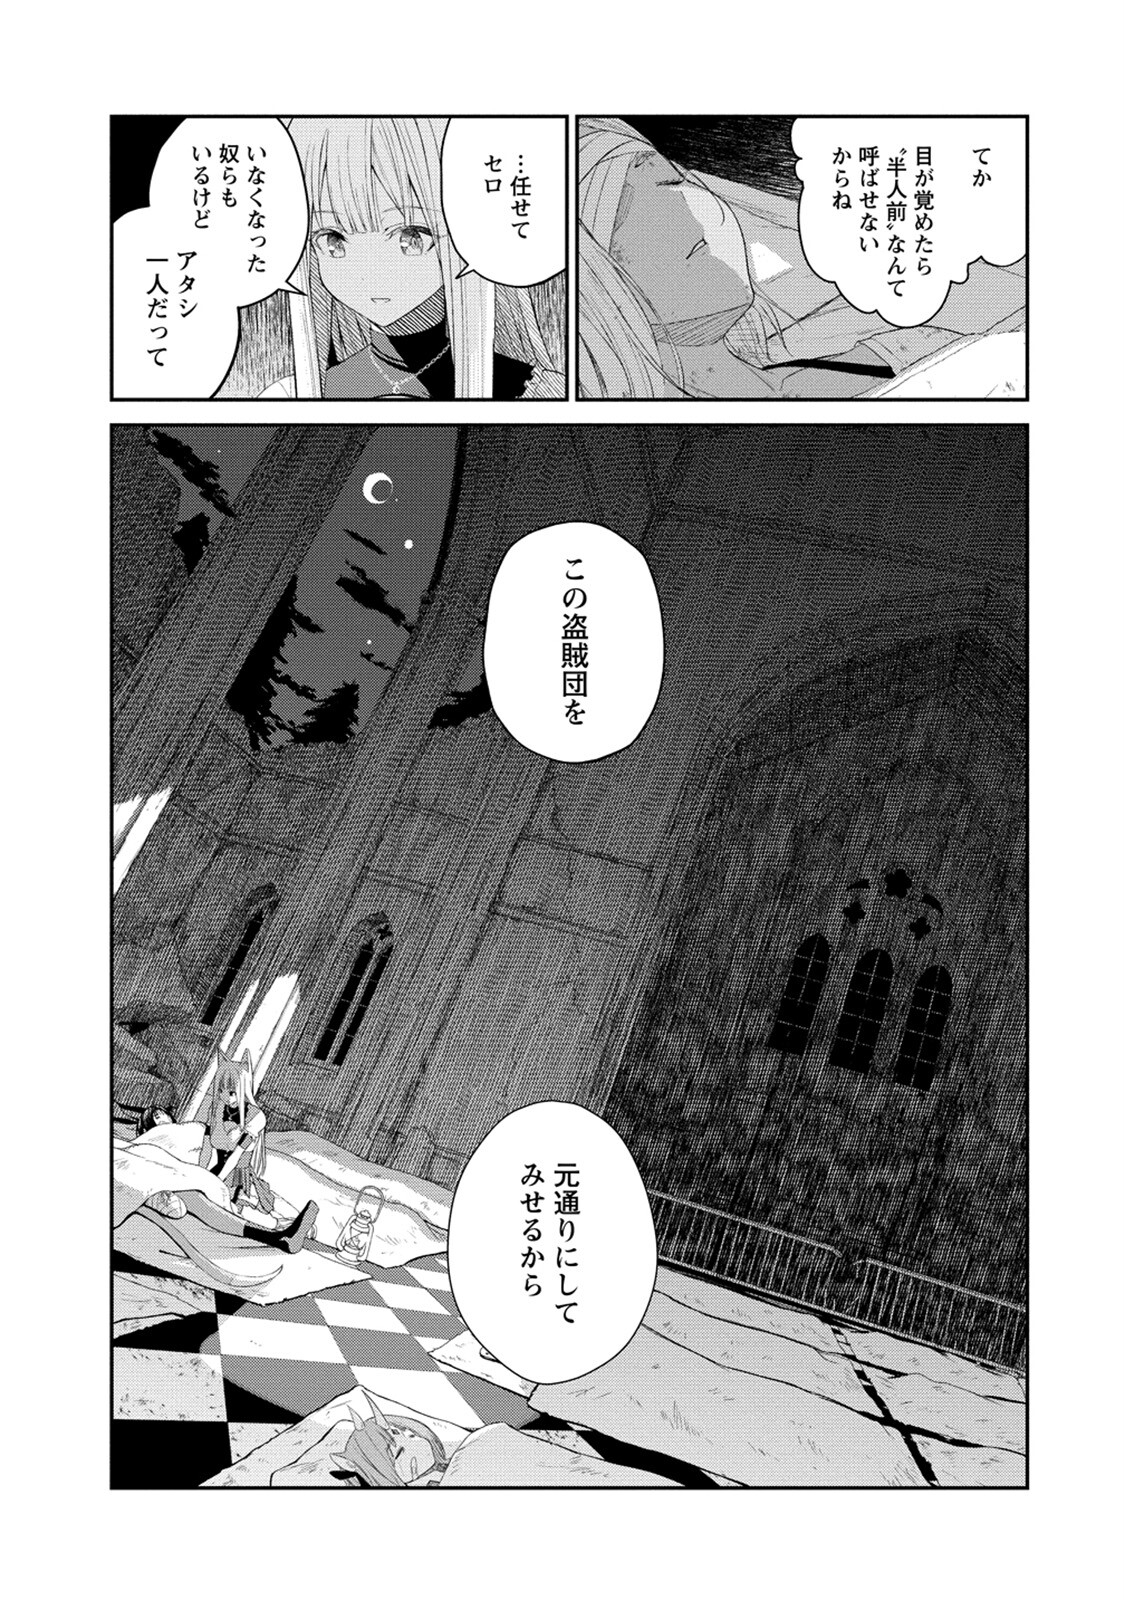 Isekai Konbini Omotenashi - Chapter 4 - Page 3